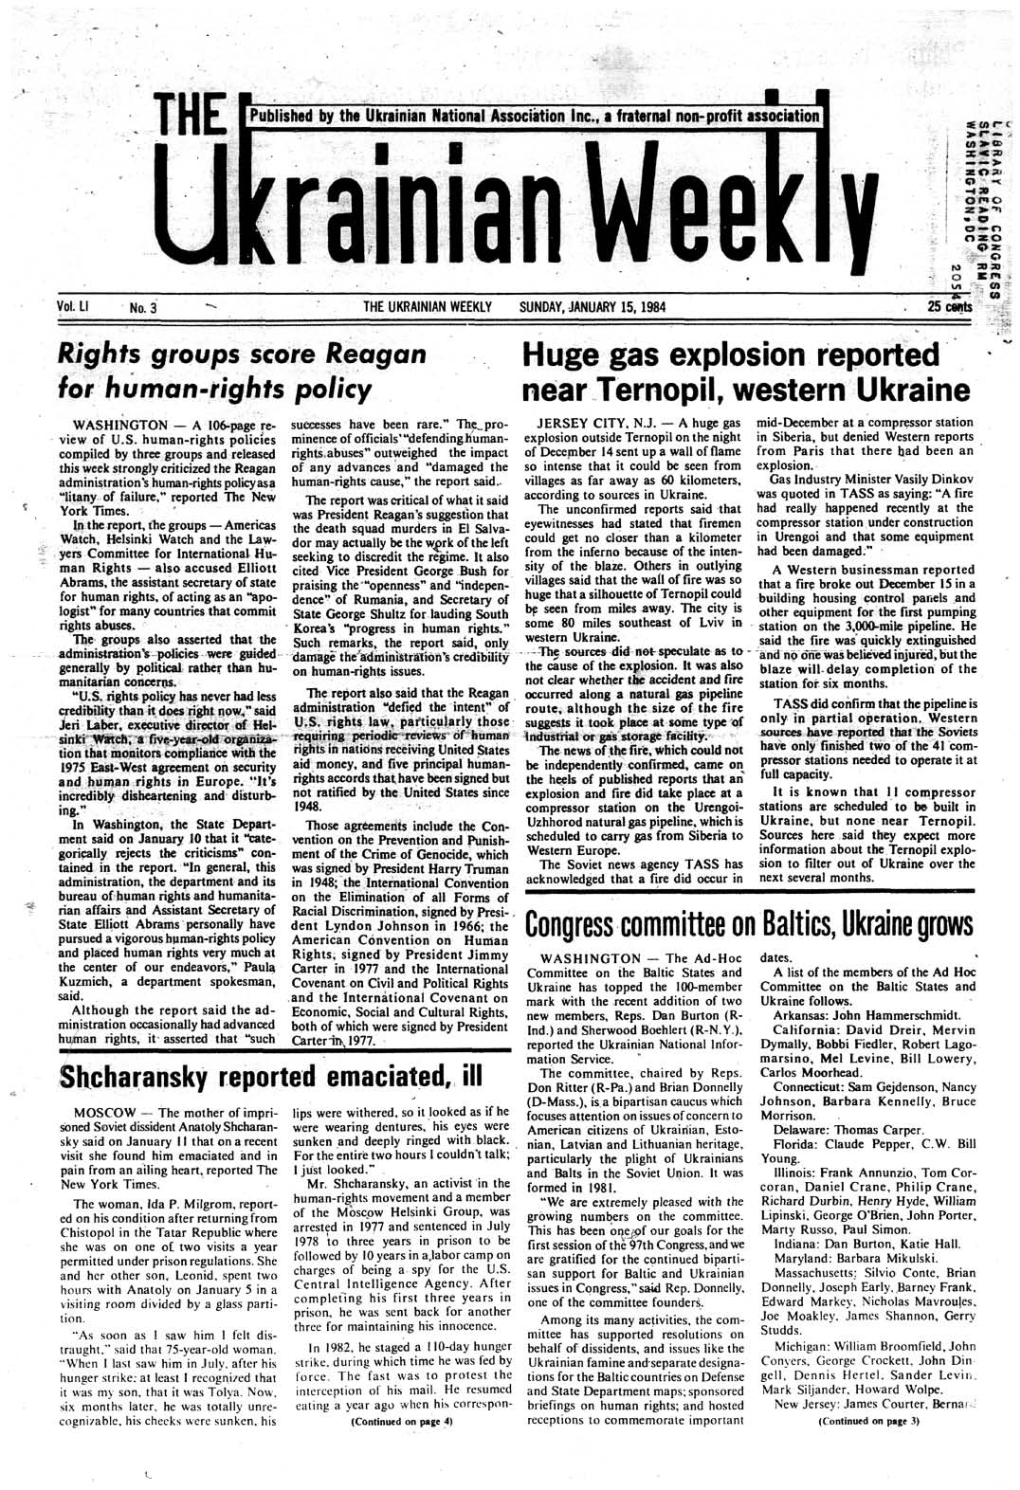 The Ukrainian Weekly 1984, No.3